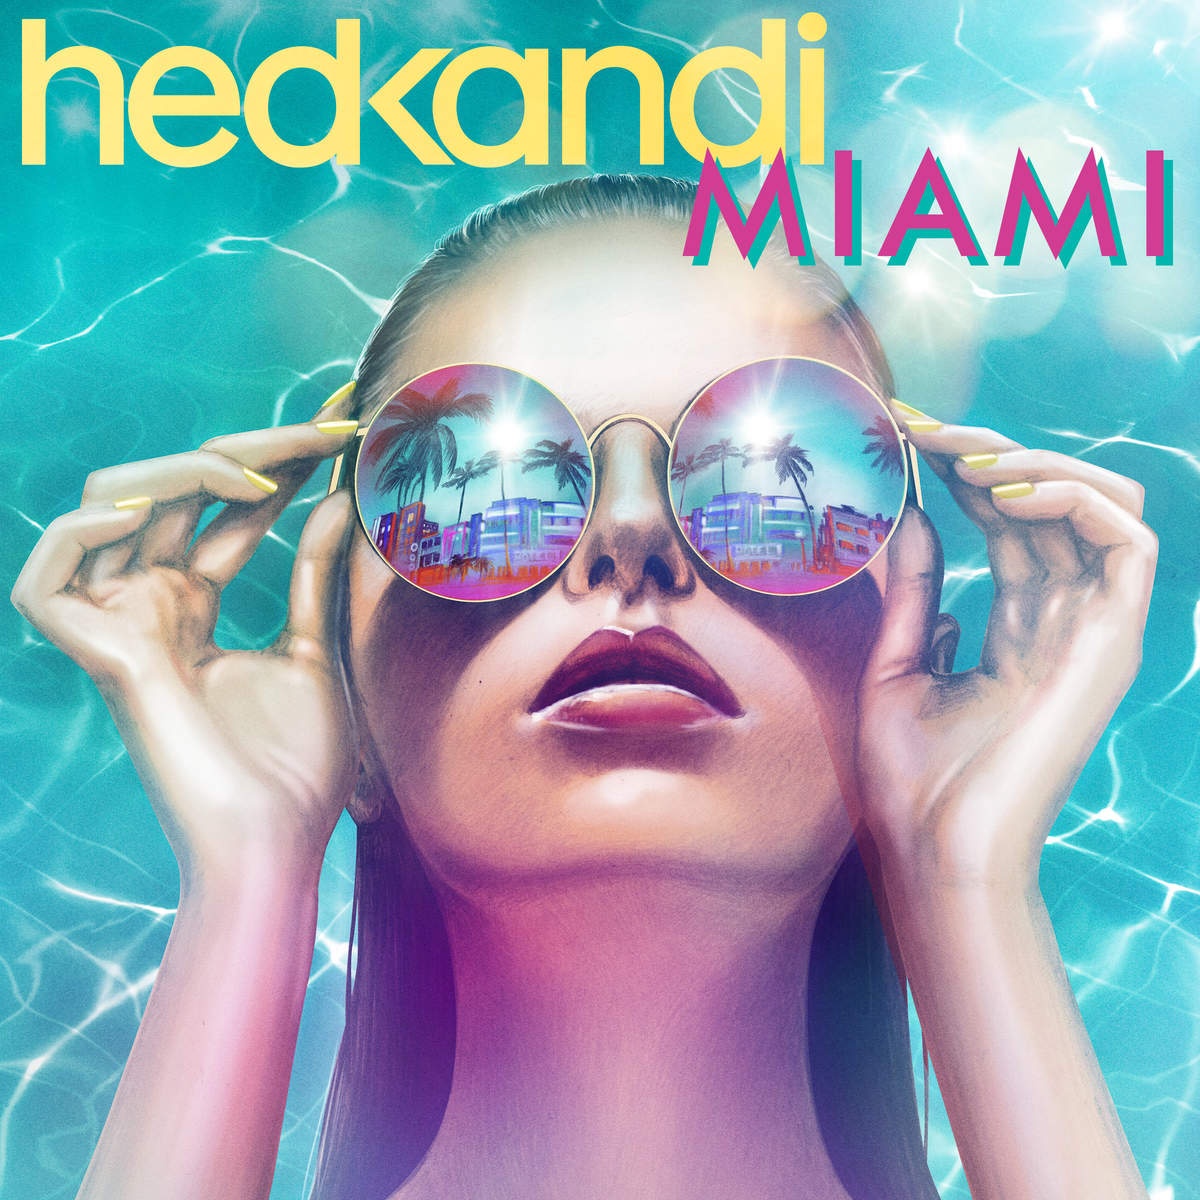 Hed Kandi Miami 2015 (Continuous Bonus Mix 2 Europe)